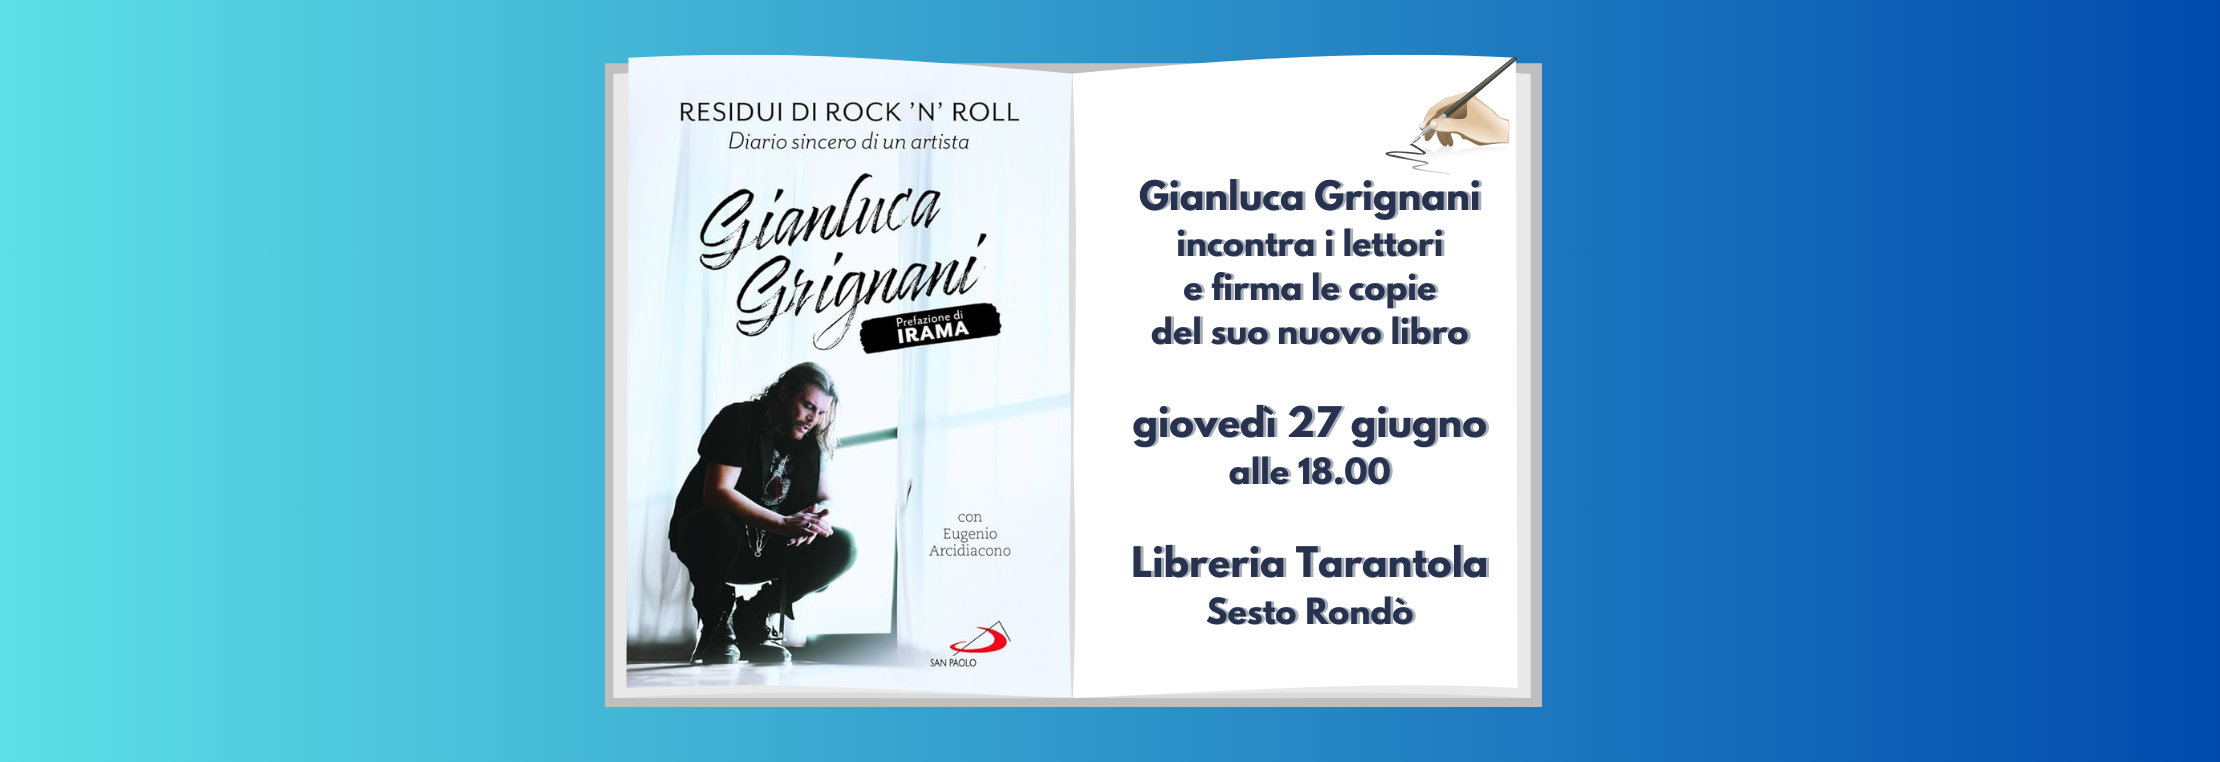 Gianluca Grignani incontra i lettori alla libreria Tarantola